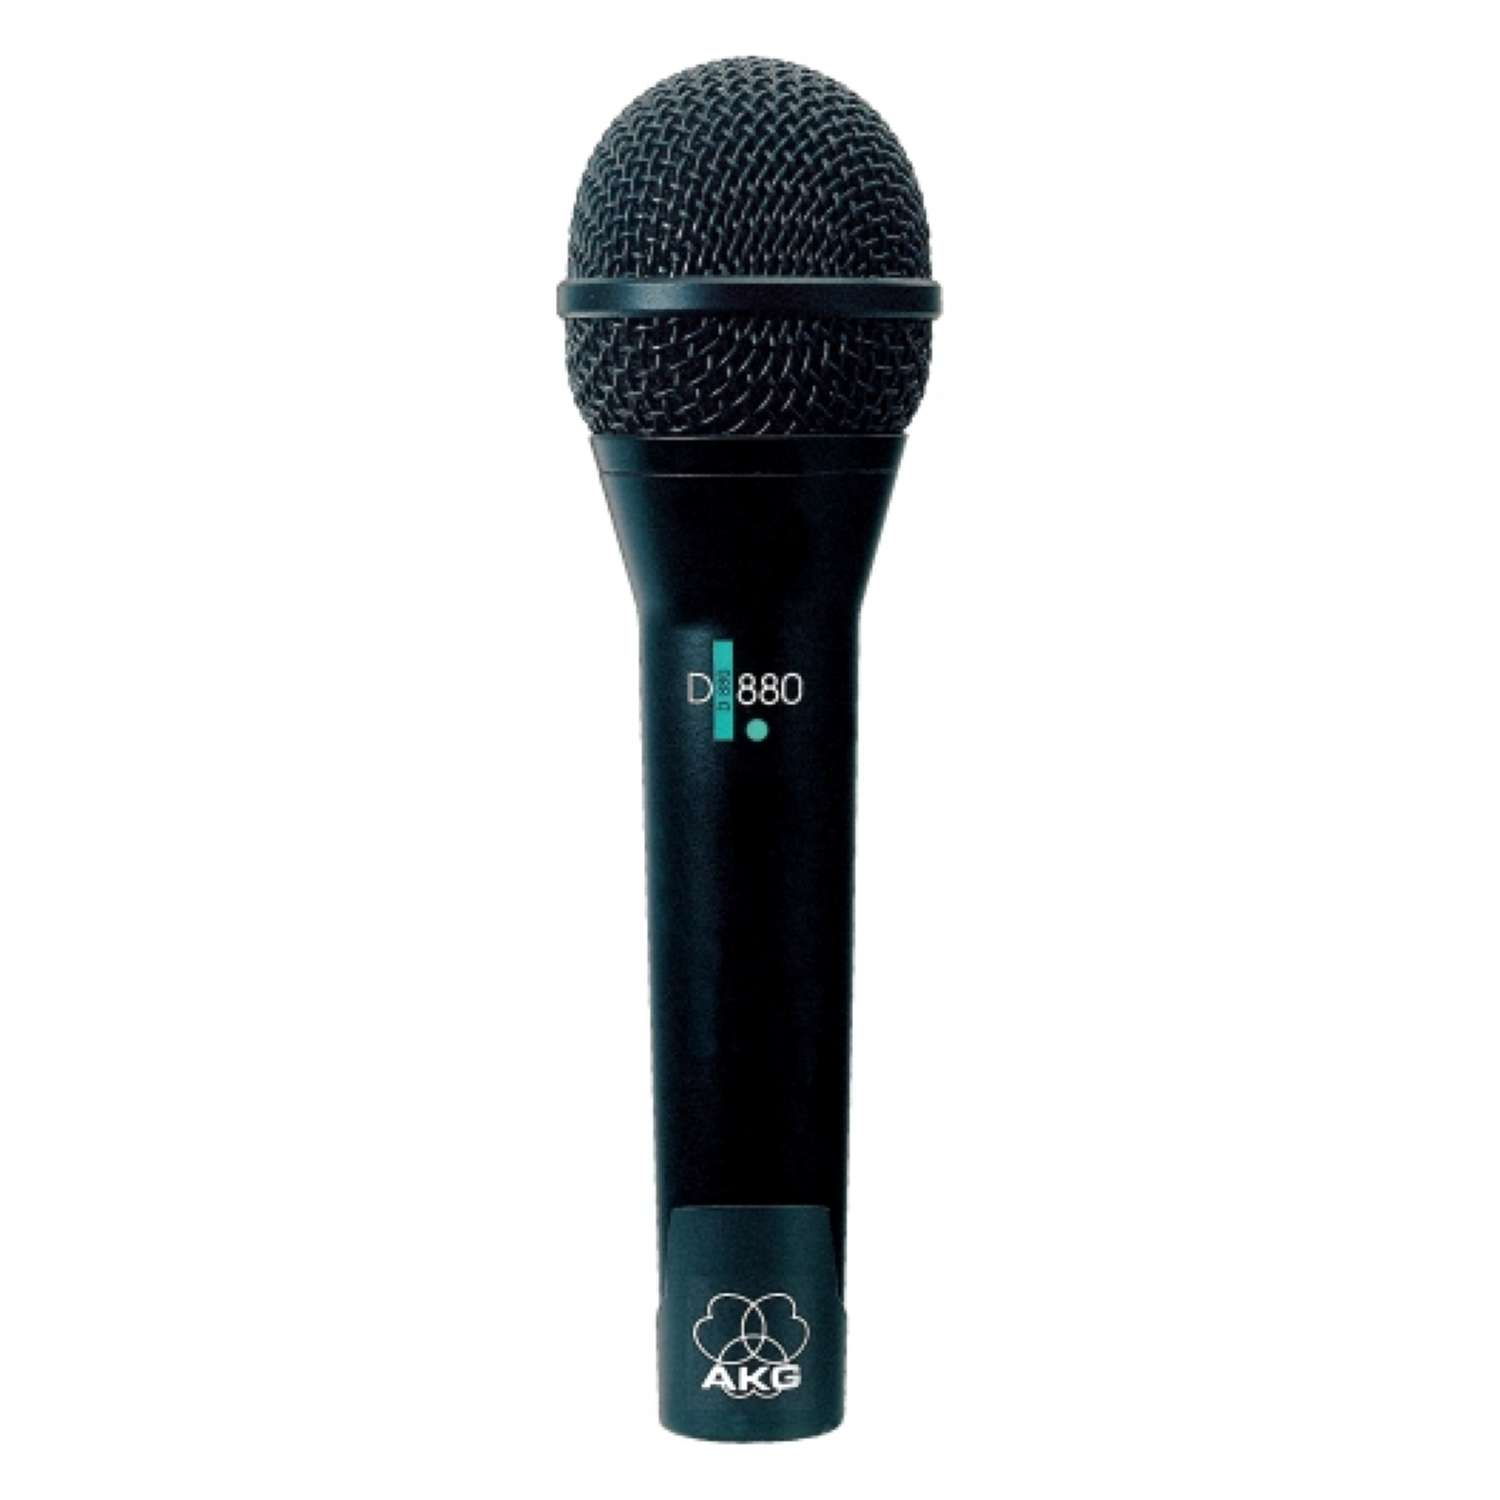 Microphone D880S AKG